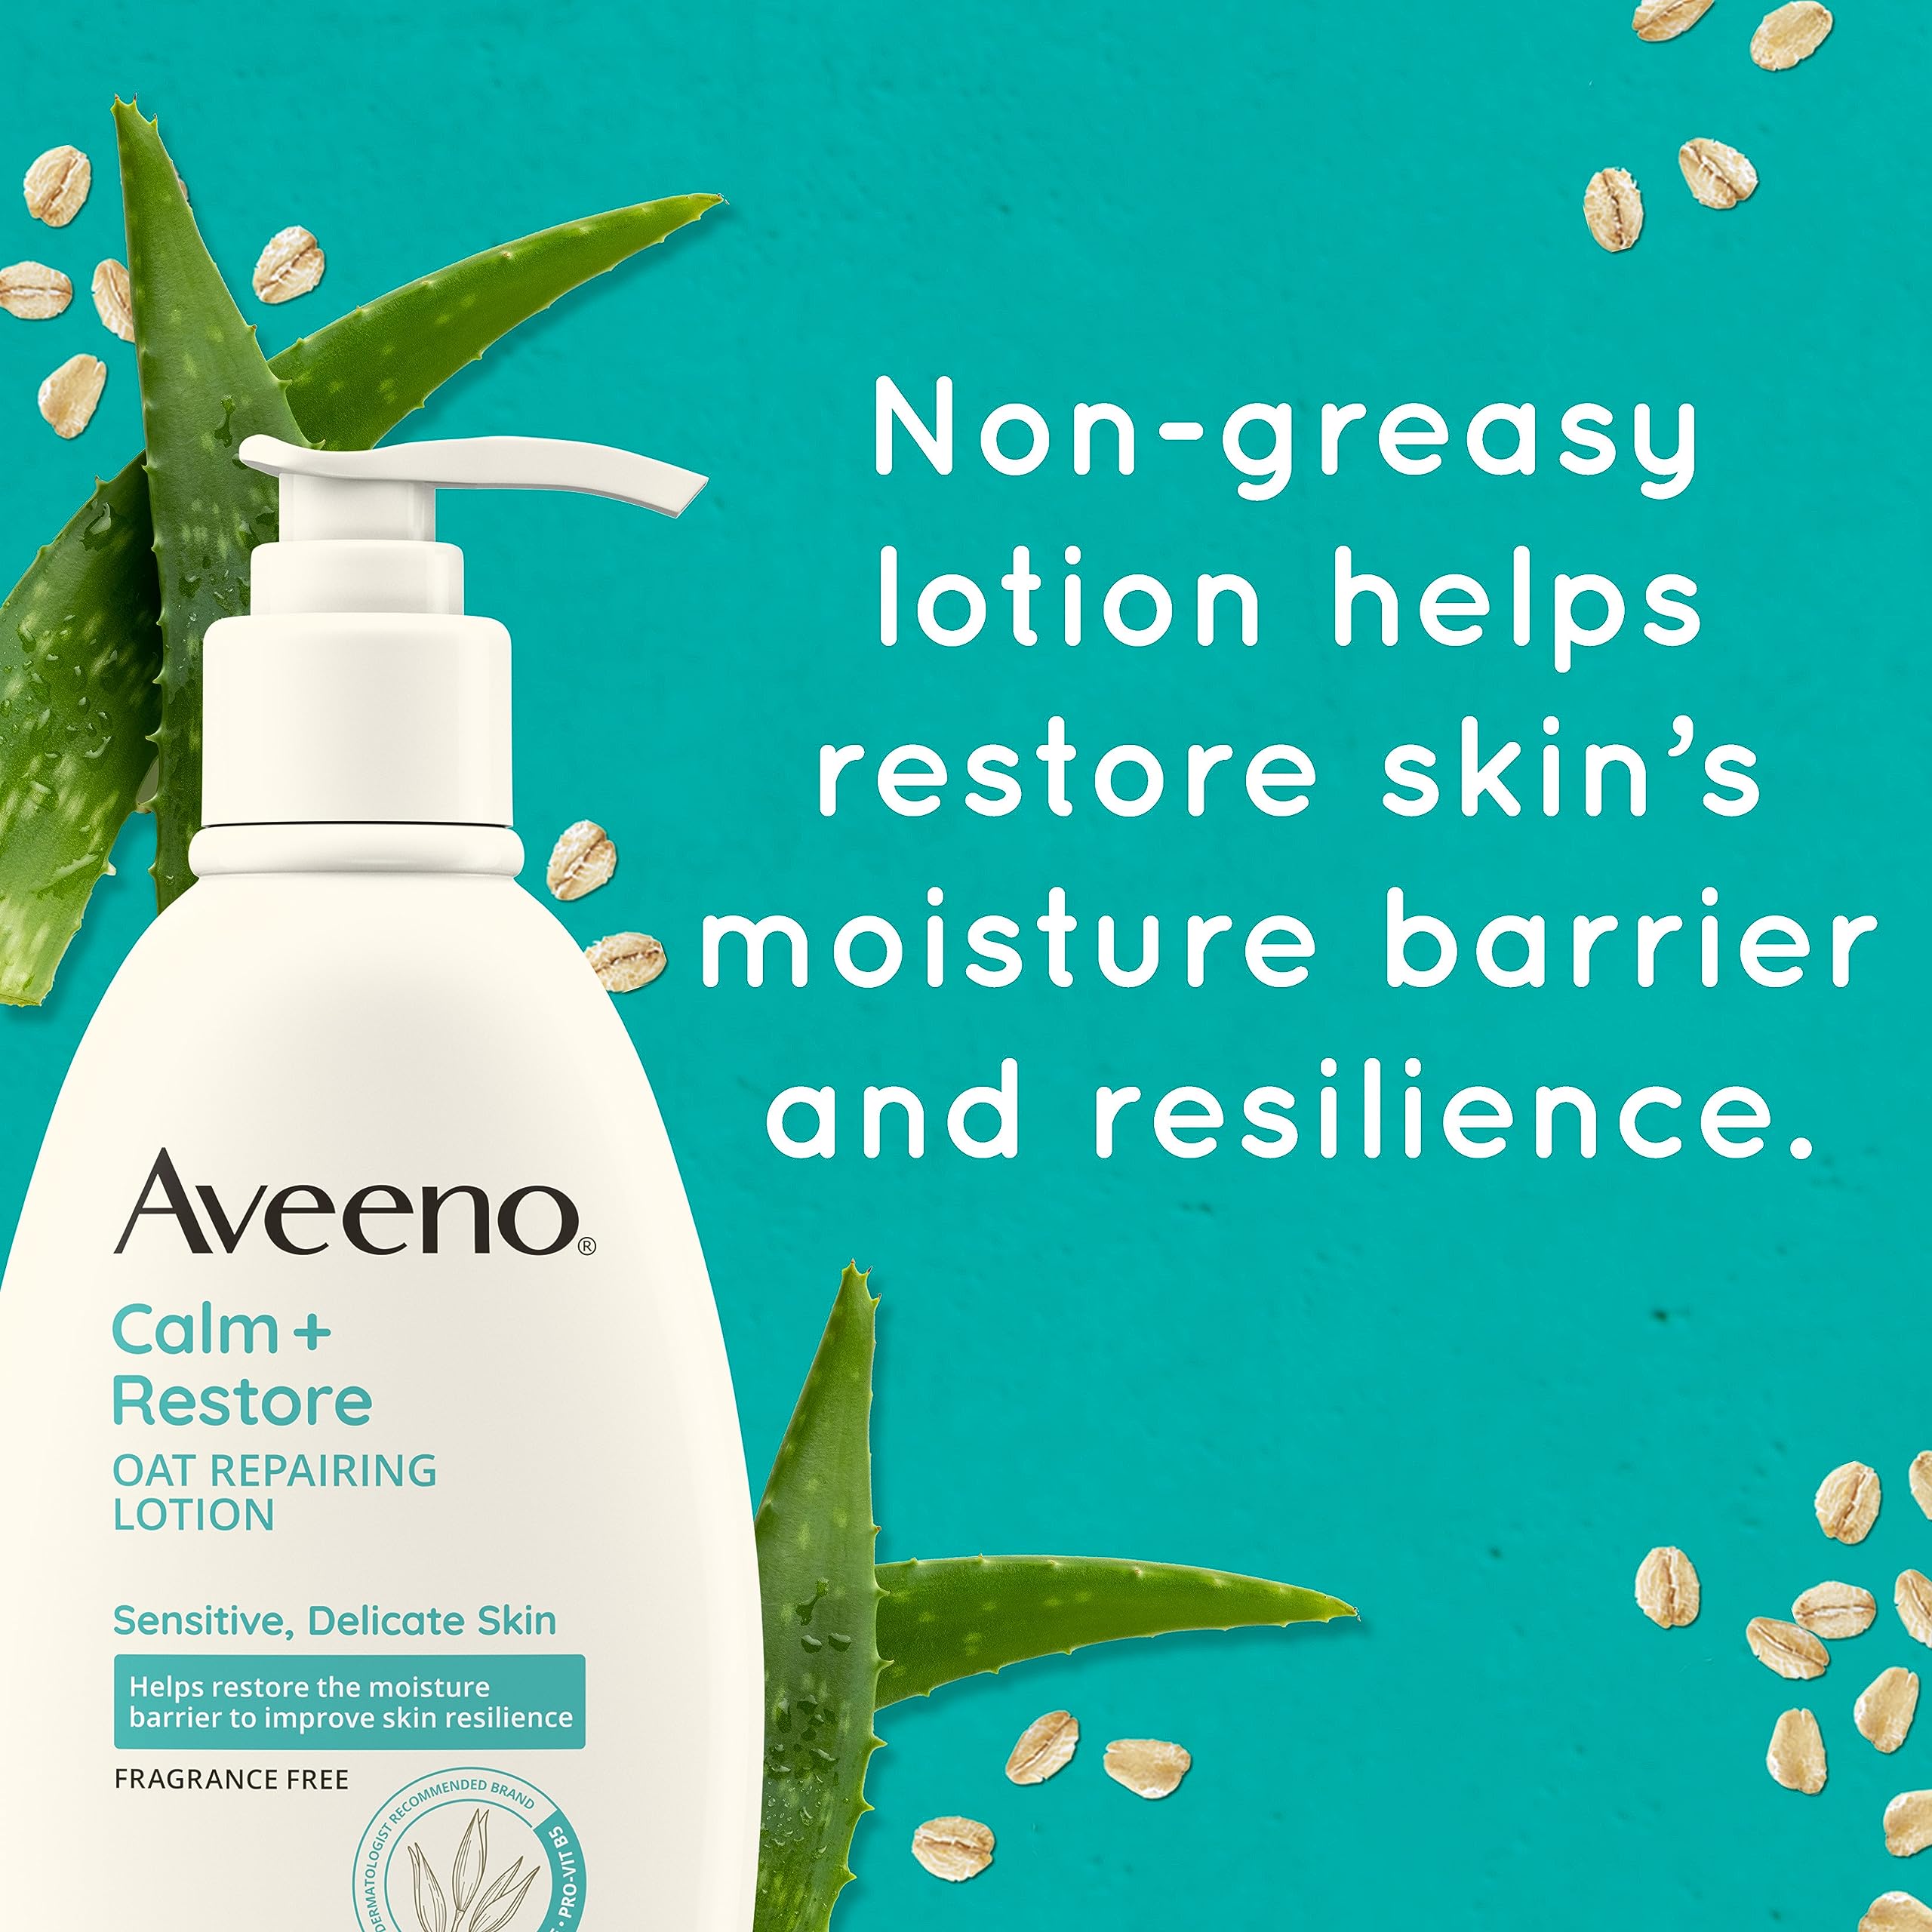 Aveeno Calm + Restore Oat Repairing Body Lotion for Sensitive Skin, Daily Moisturizer with Prebiotic Oat, Aloe & Pro-Vitamin B5 Helps Restore Skin's Moisture Barrier, Fragrance Free, 12 oz